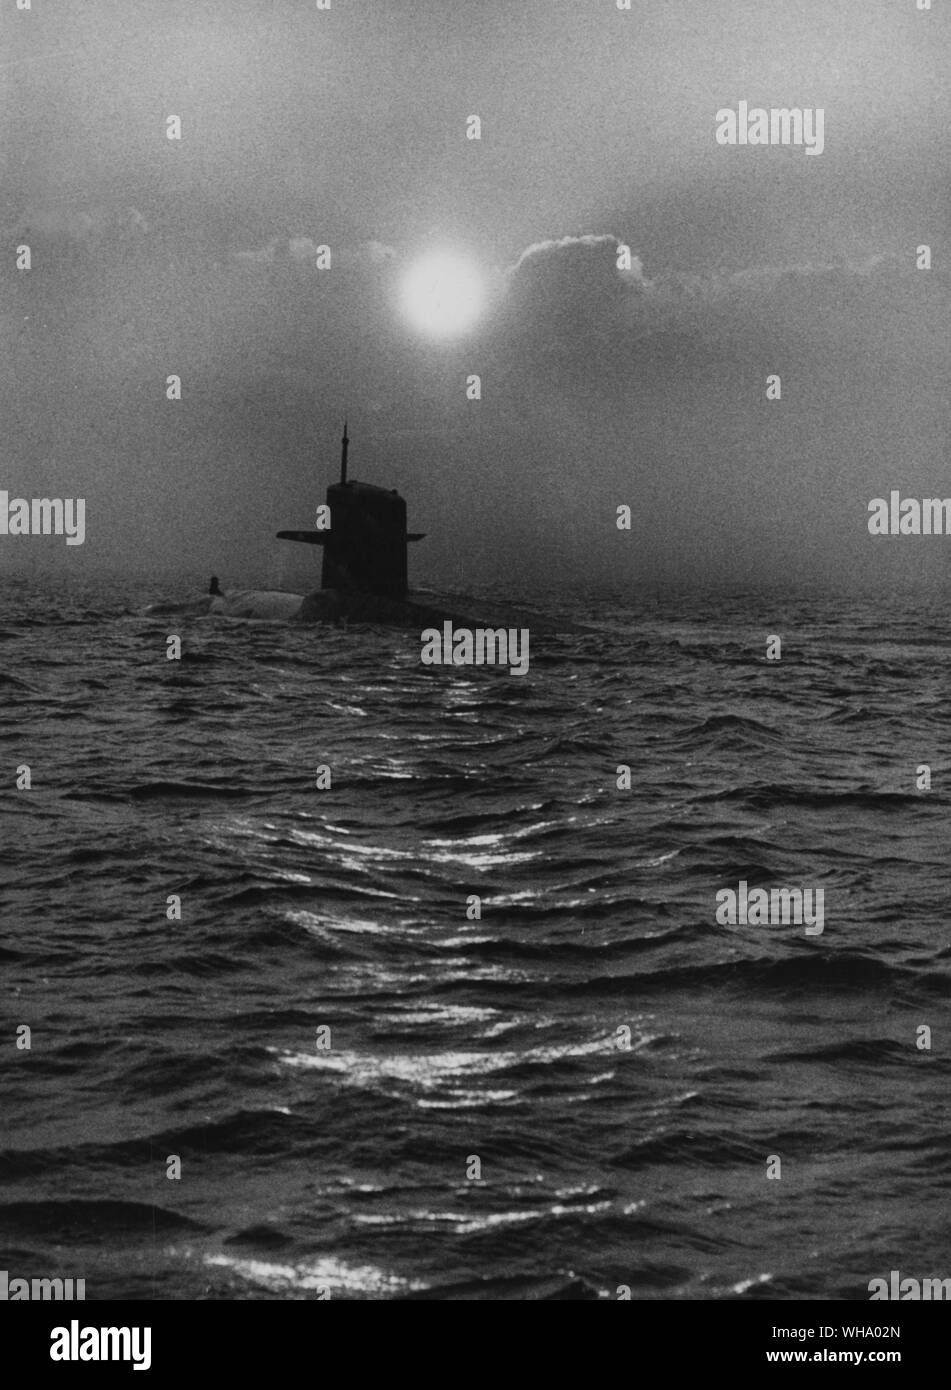 Scotland, UK: Polaris at Holy Loch. Surfacing at dawn - the Polaris missile submarine, Abraham Lincoln out on patrol. Stock Photo